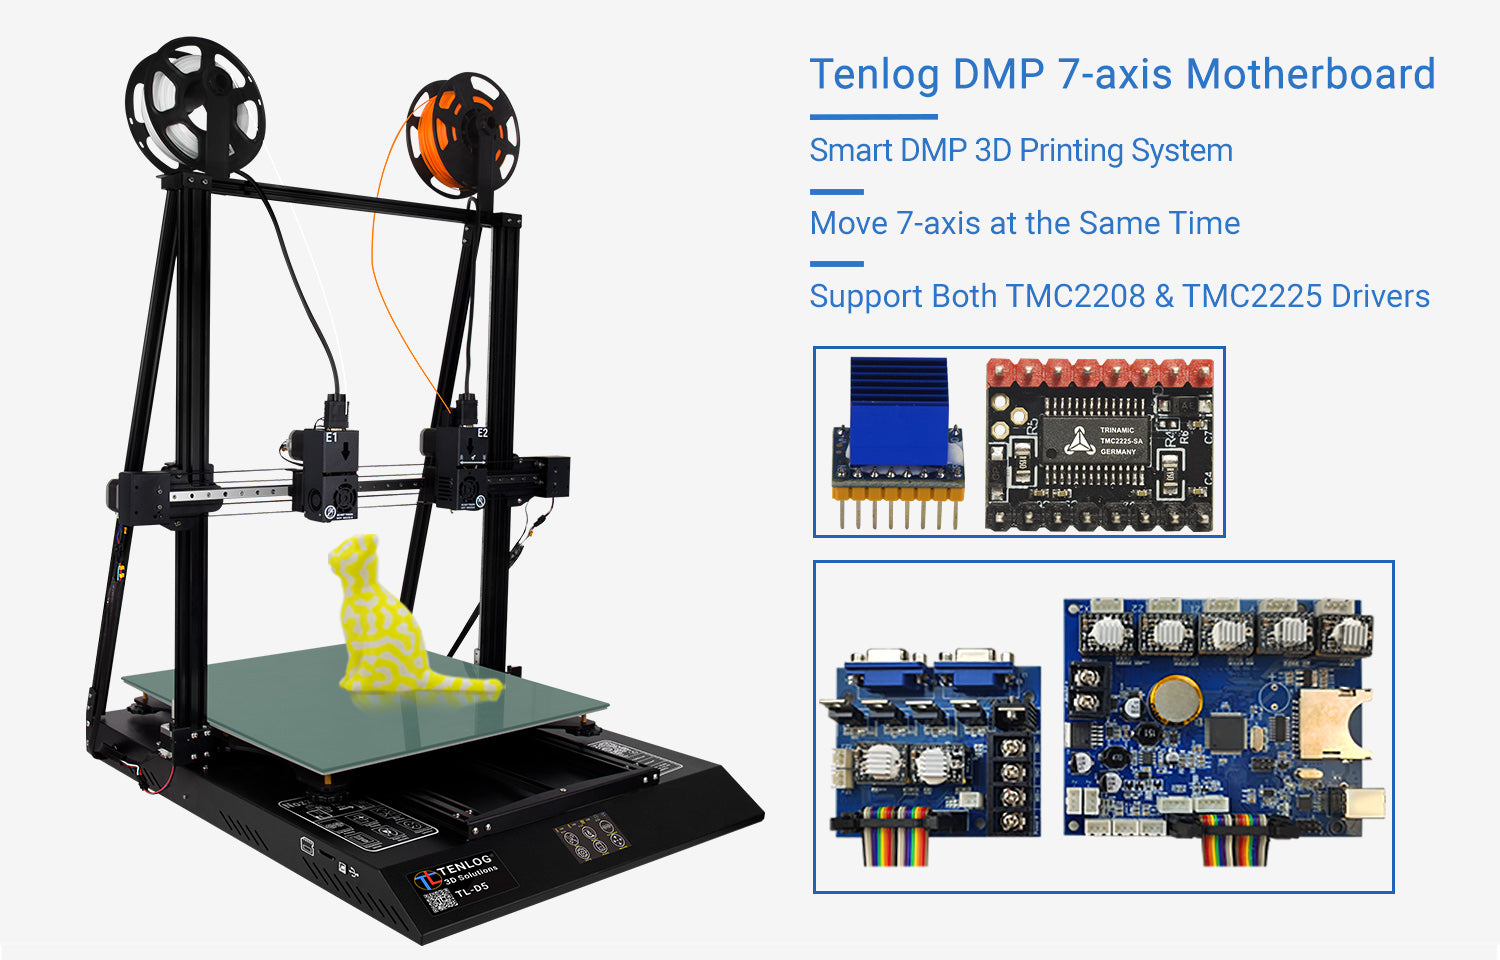 Tenlog DMP 7-axis Motherboard